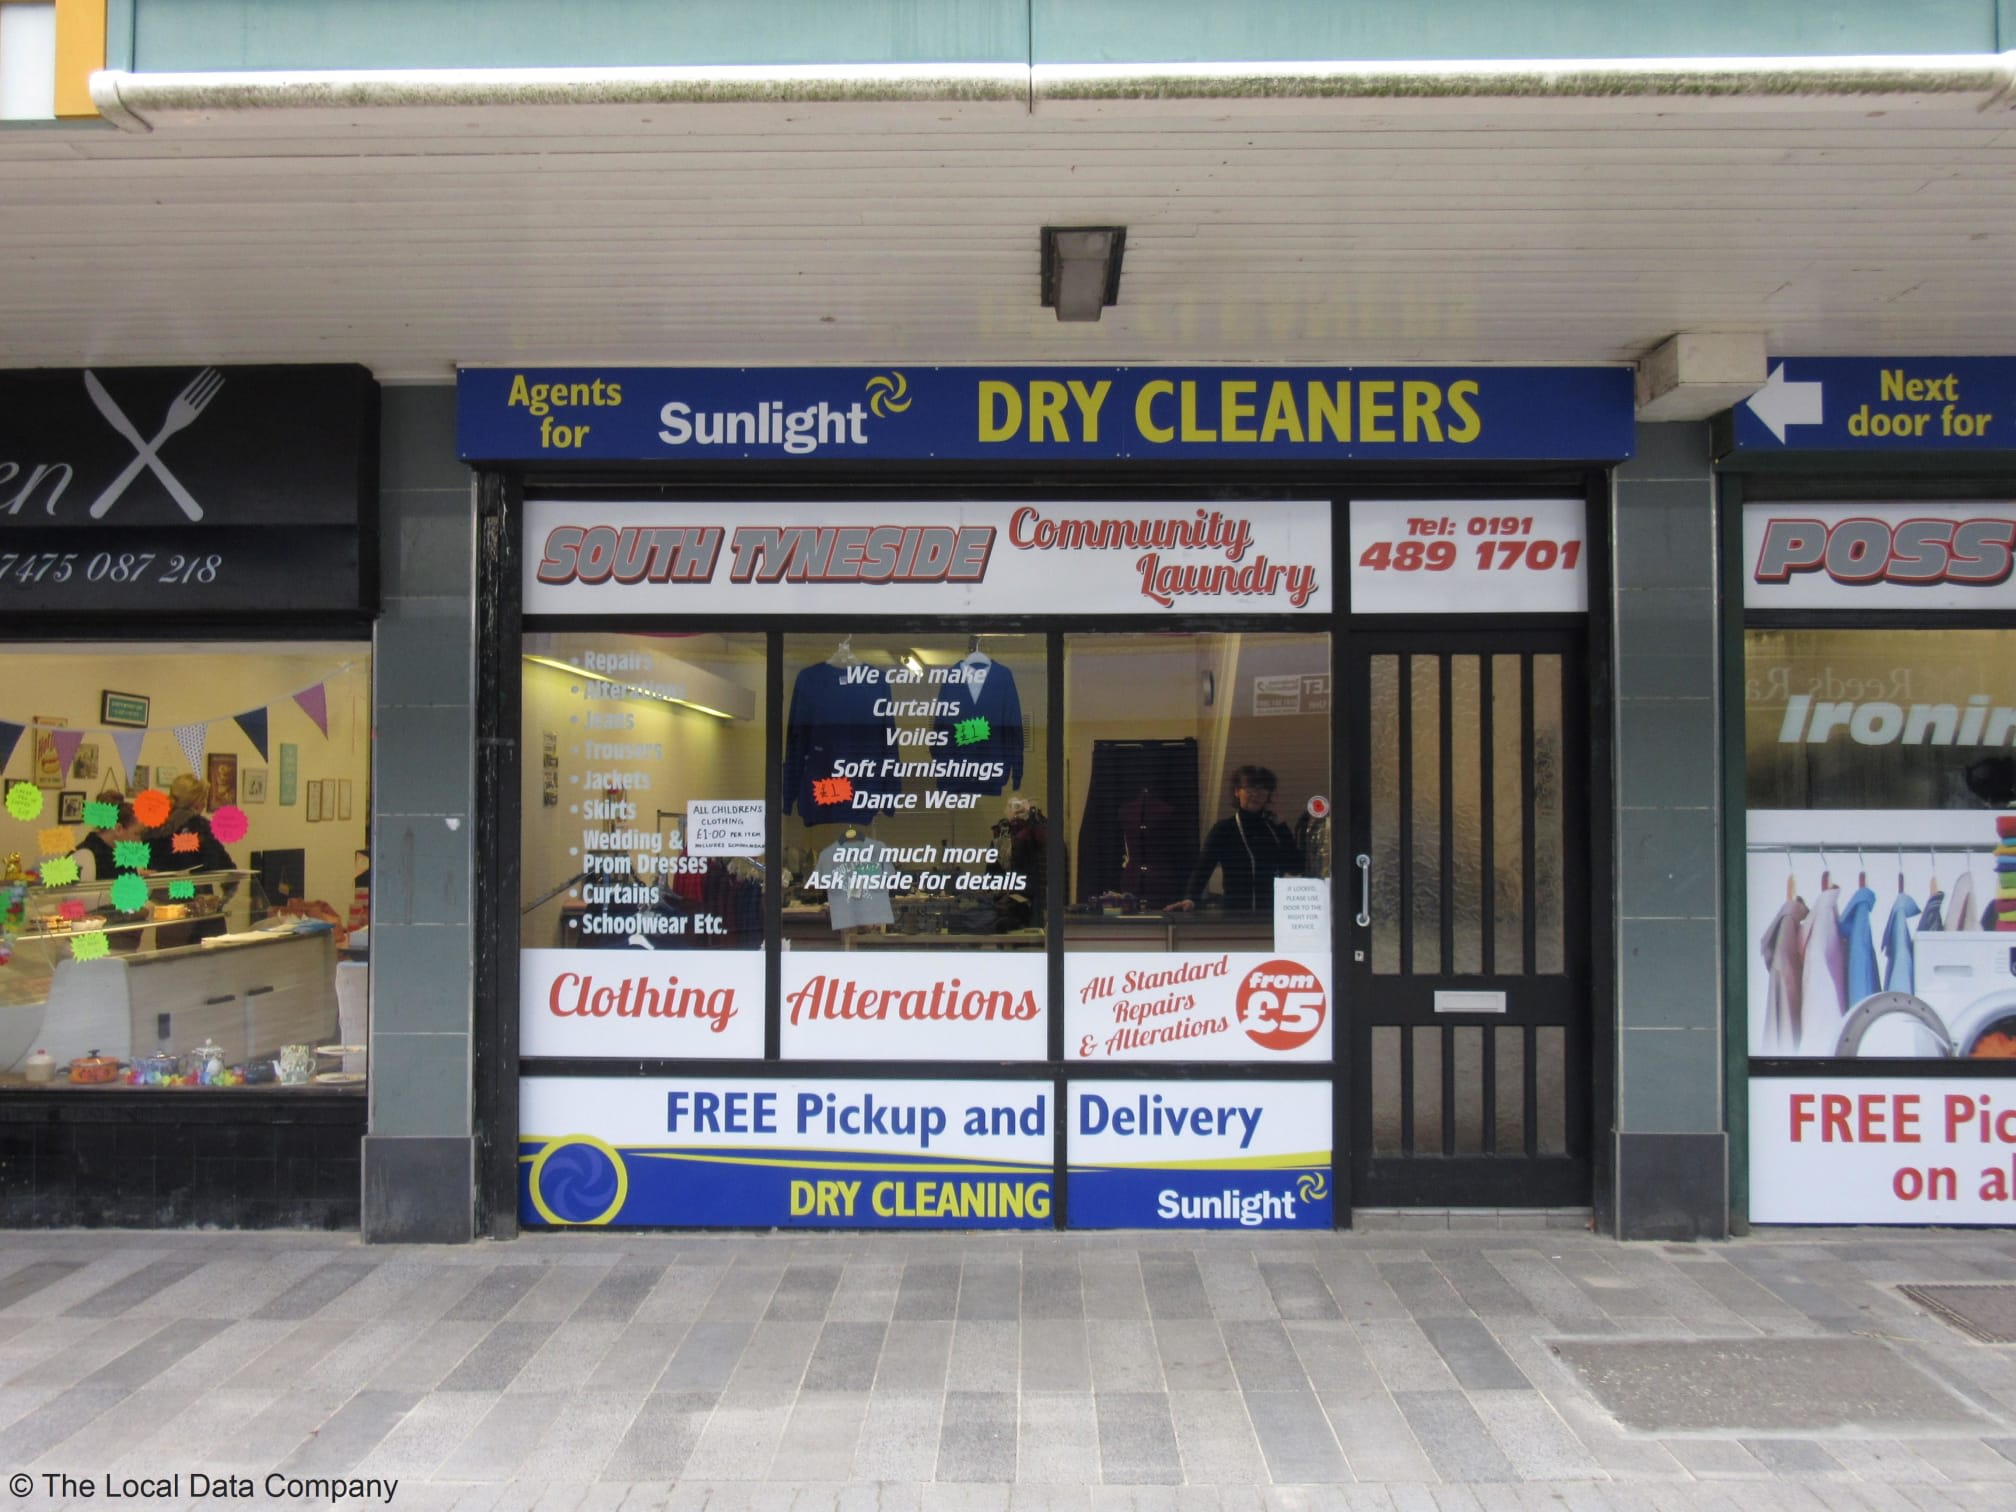 Poss Tub Laundry & South Tyneside Community Laundry | 5 - 7 St Johns Precinct, Hebburn NE31 1LG | +44 191 489 1701